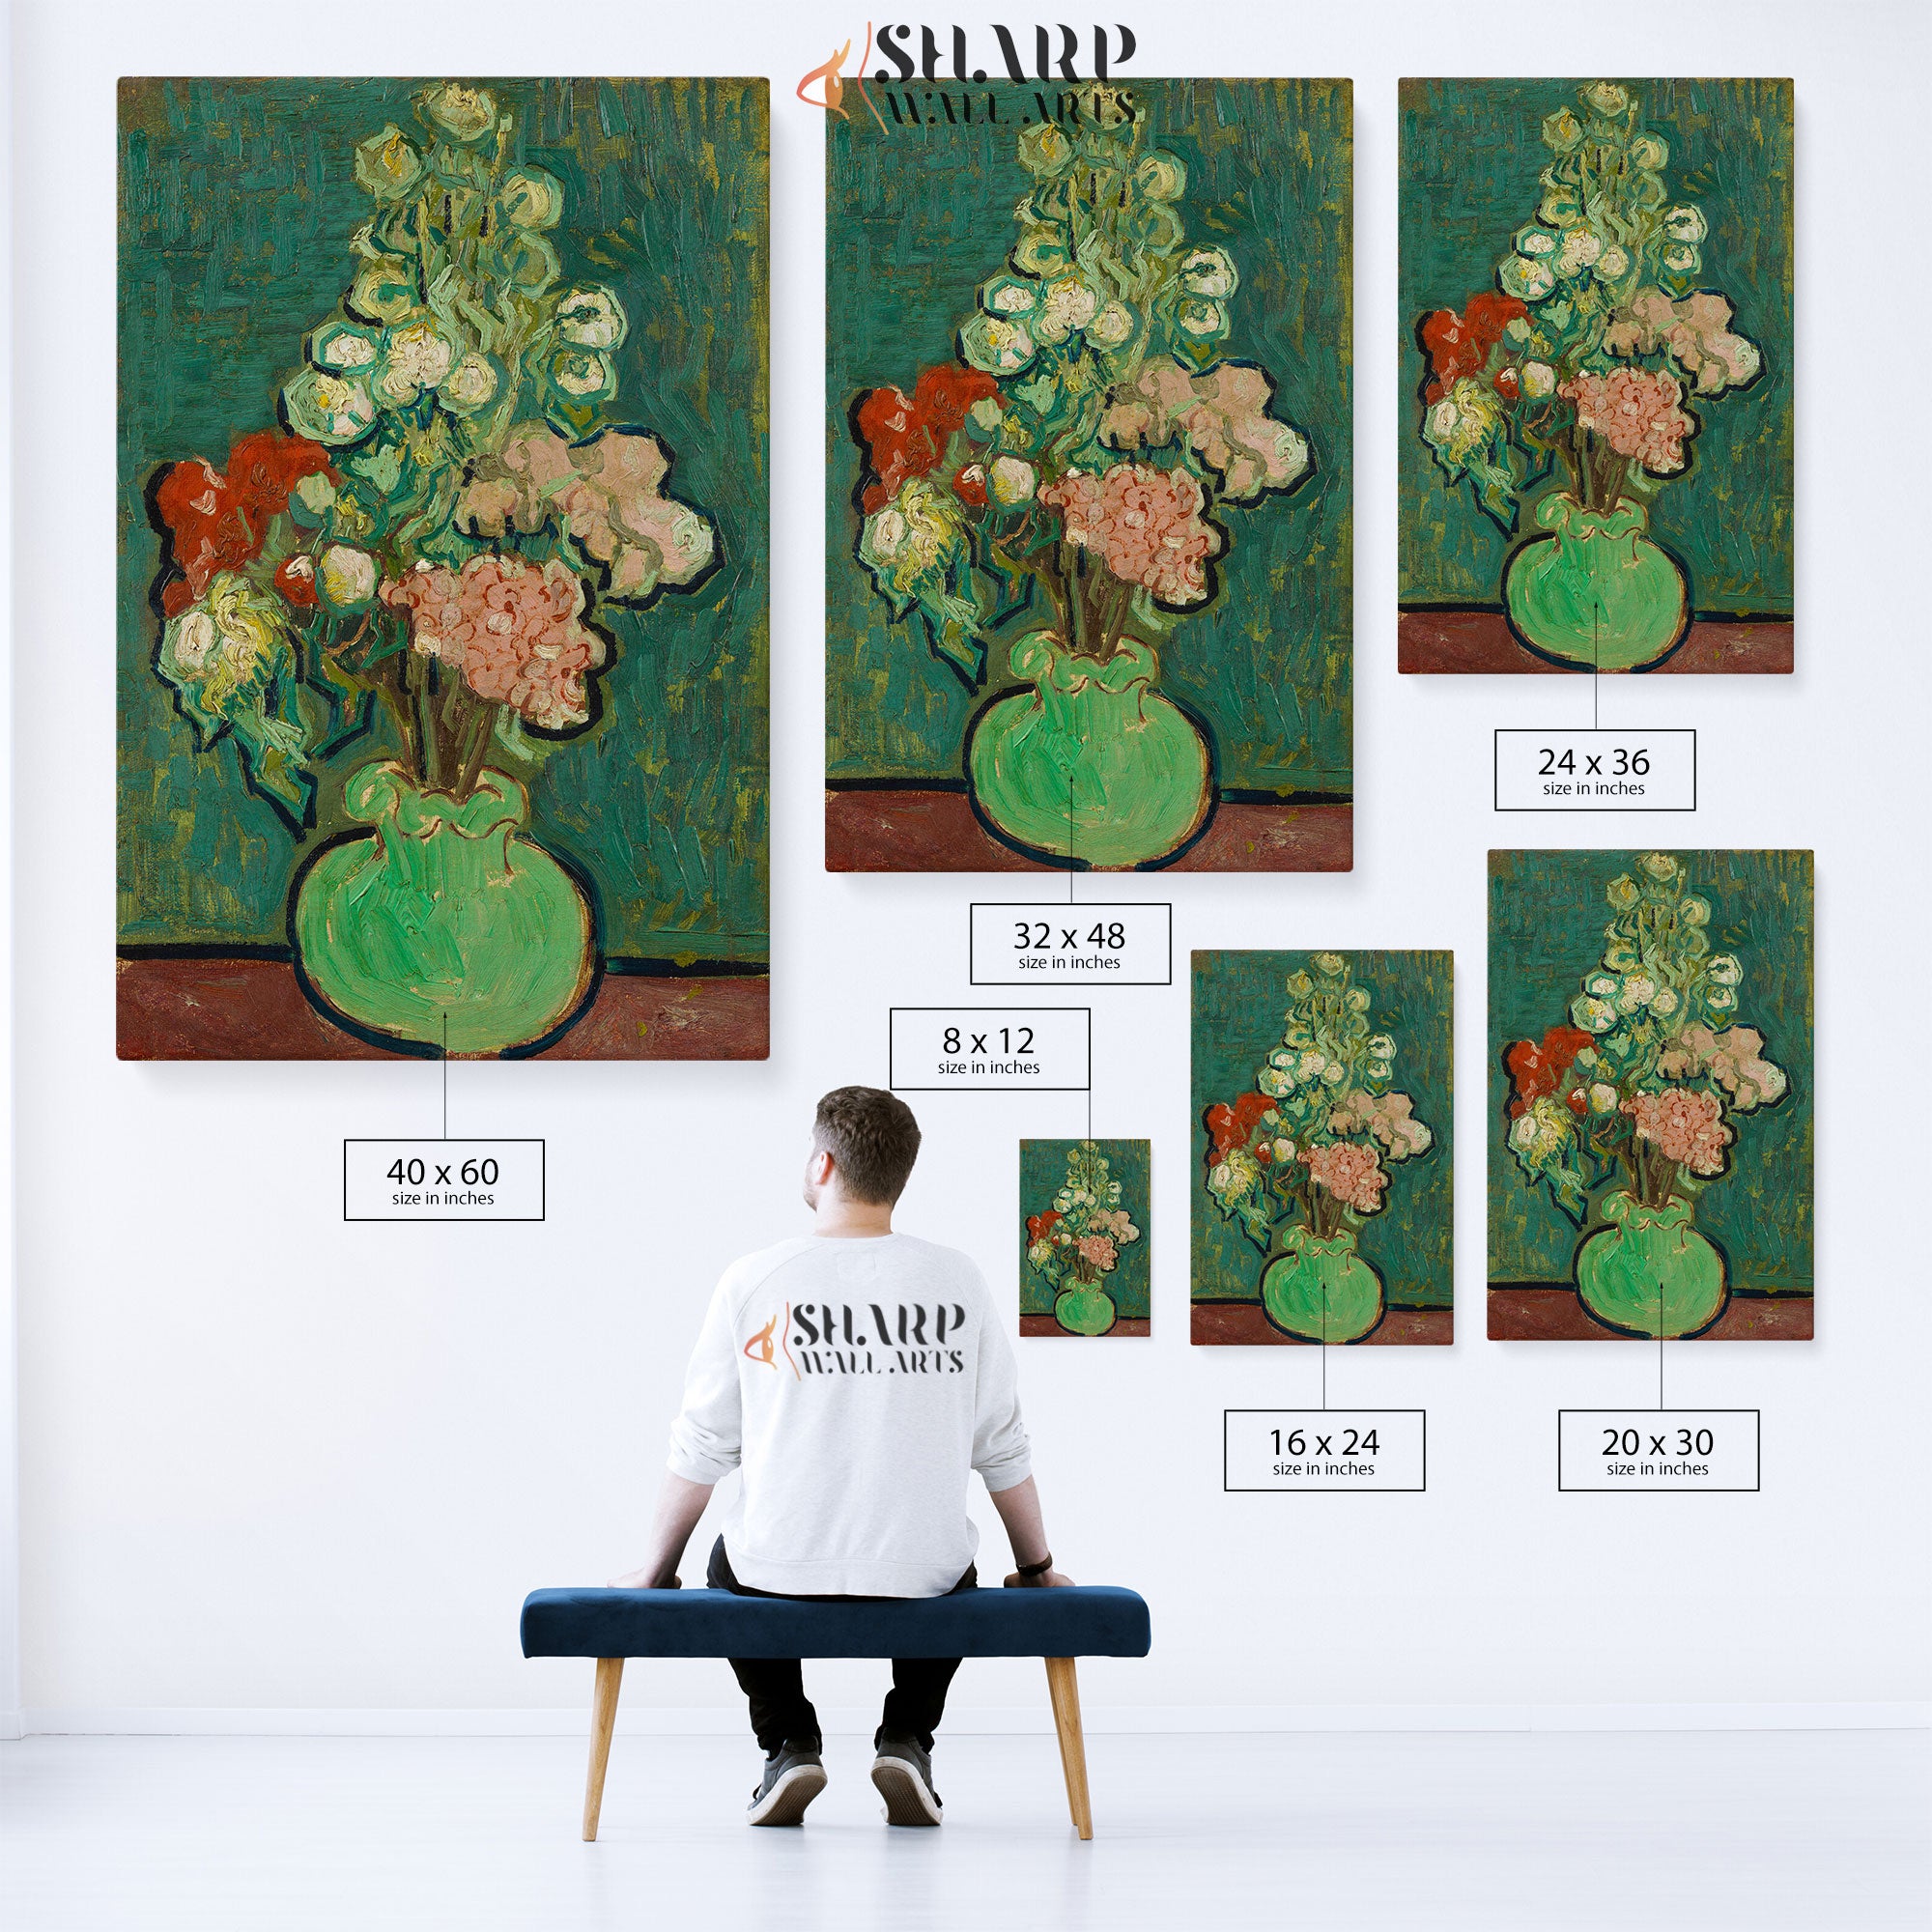 Vincent van Gogh Vase Of Flowers Canvas Wall Art